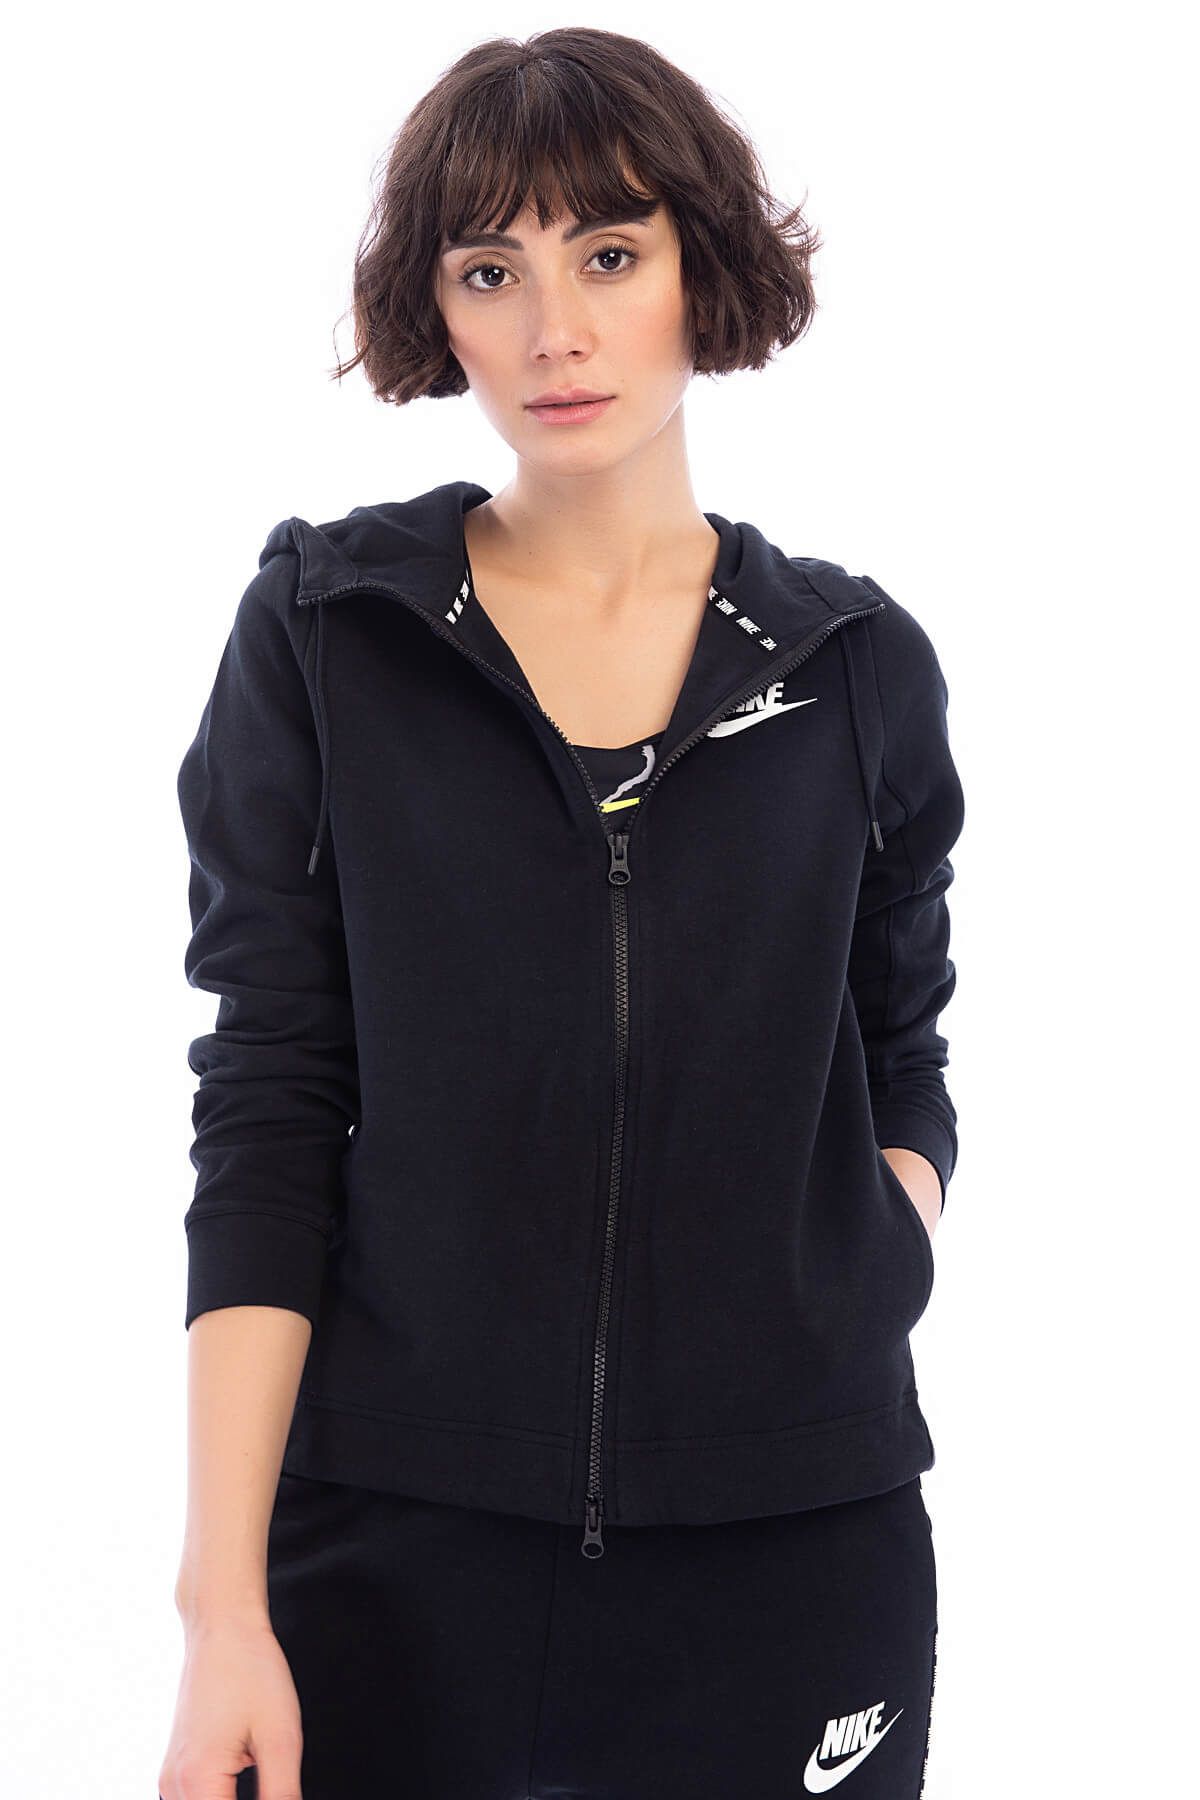 Nike Kadın Sweatshirt - W Nsw Av15 Hoodıe Fz - 930899-010